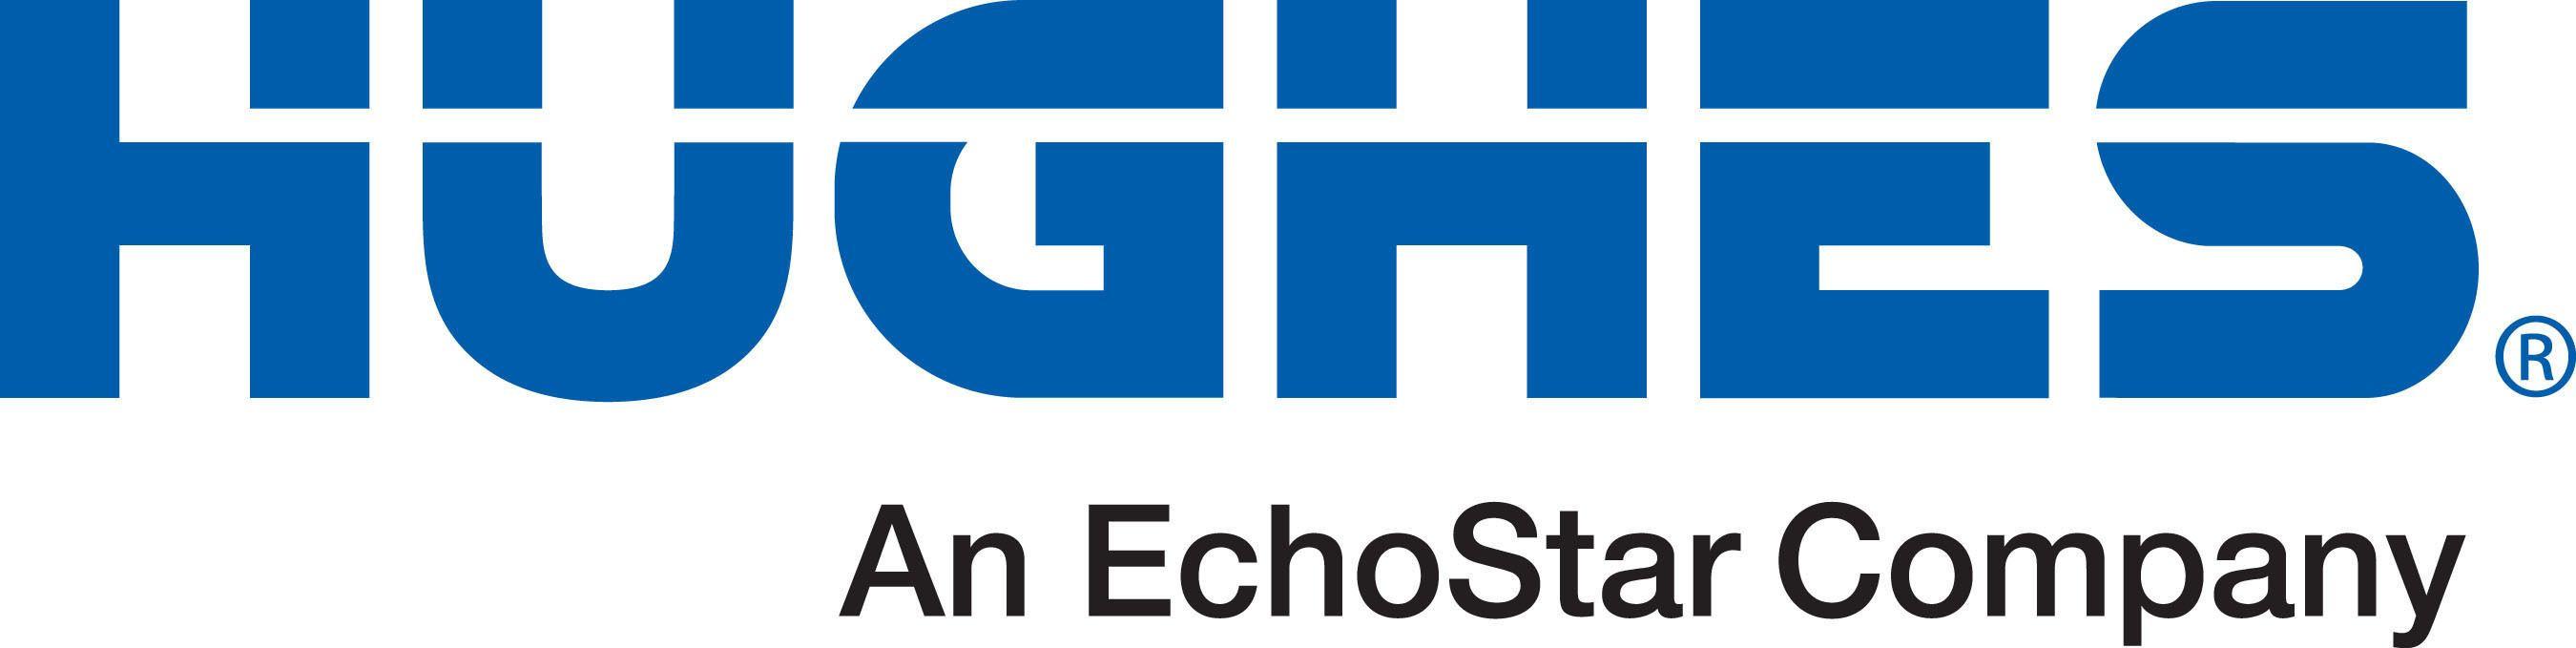 Telesat Logo - Hughes And Telesat Sign Agreement For High Throughput Capacity